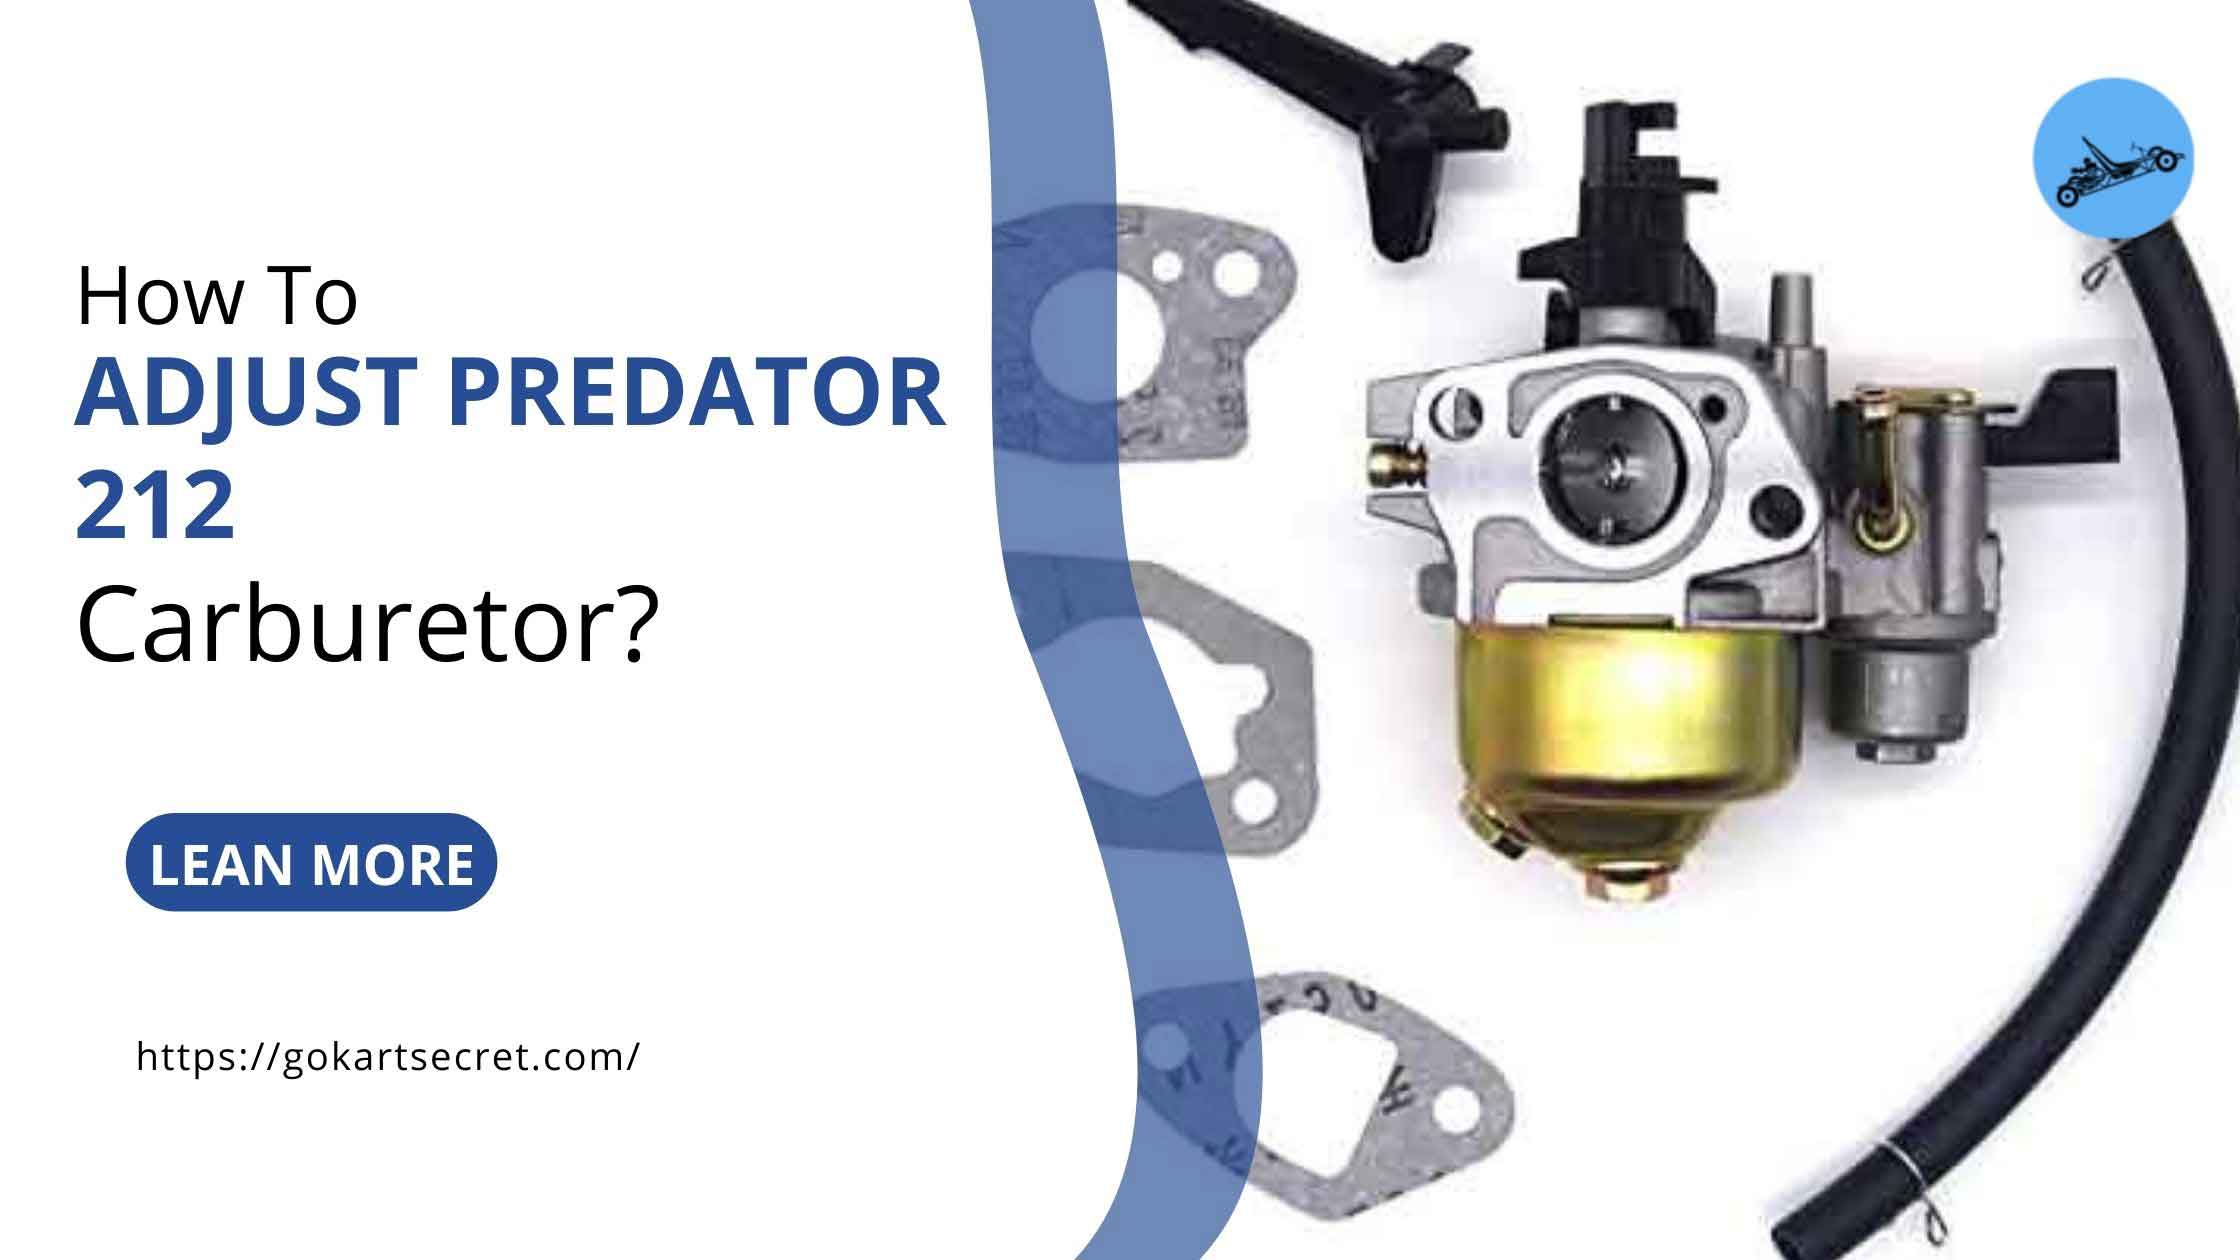 How To Adjust Predator 212 Carburetor?